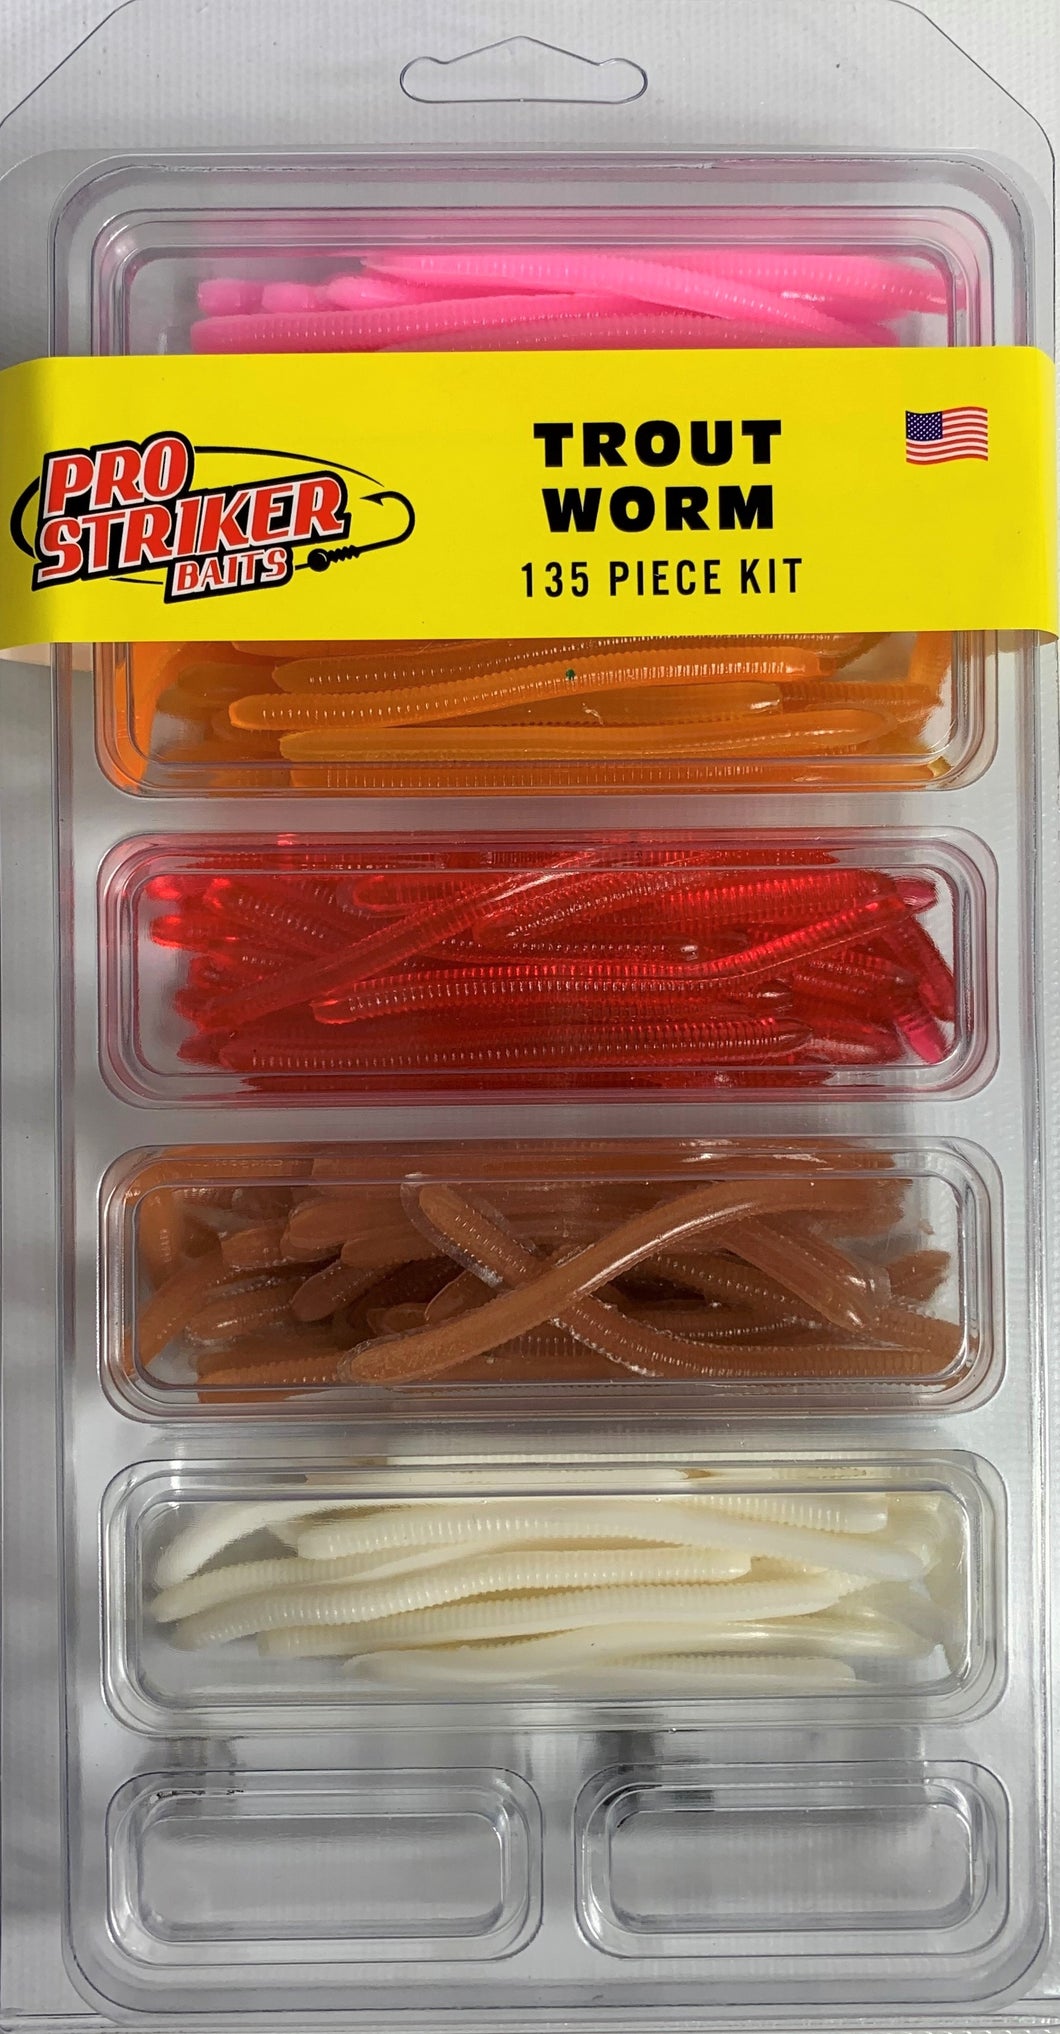 Pro Striker Trout Worm 135-Piece Kit